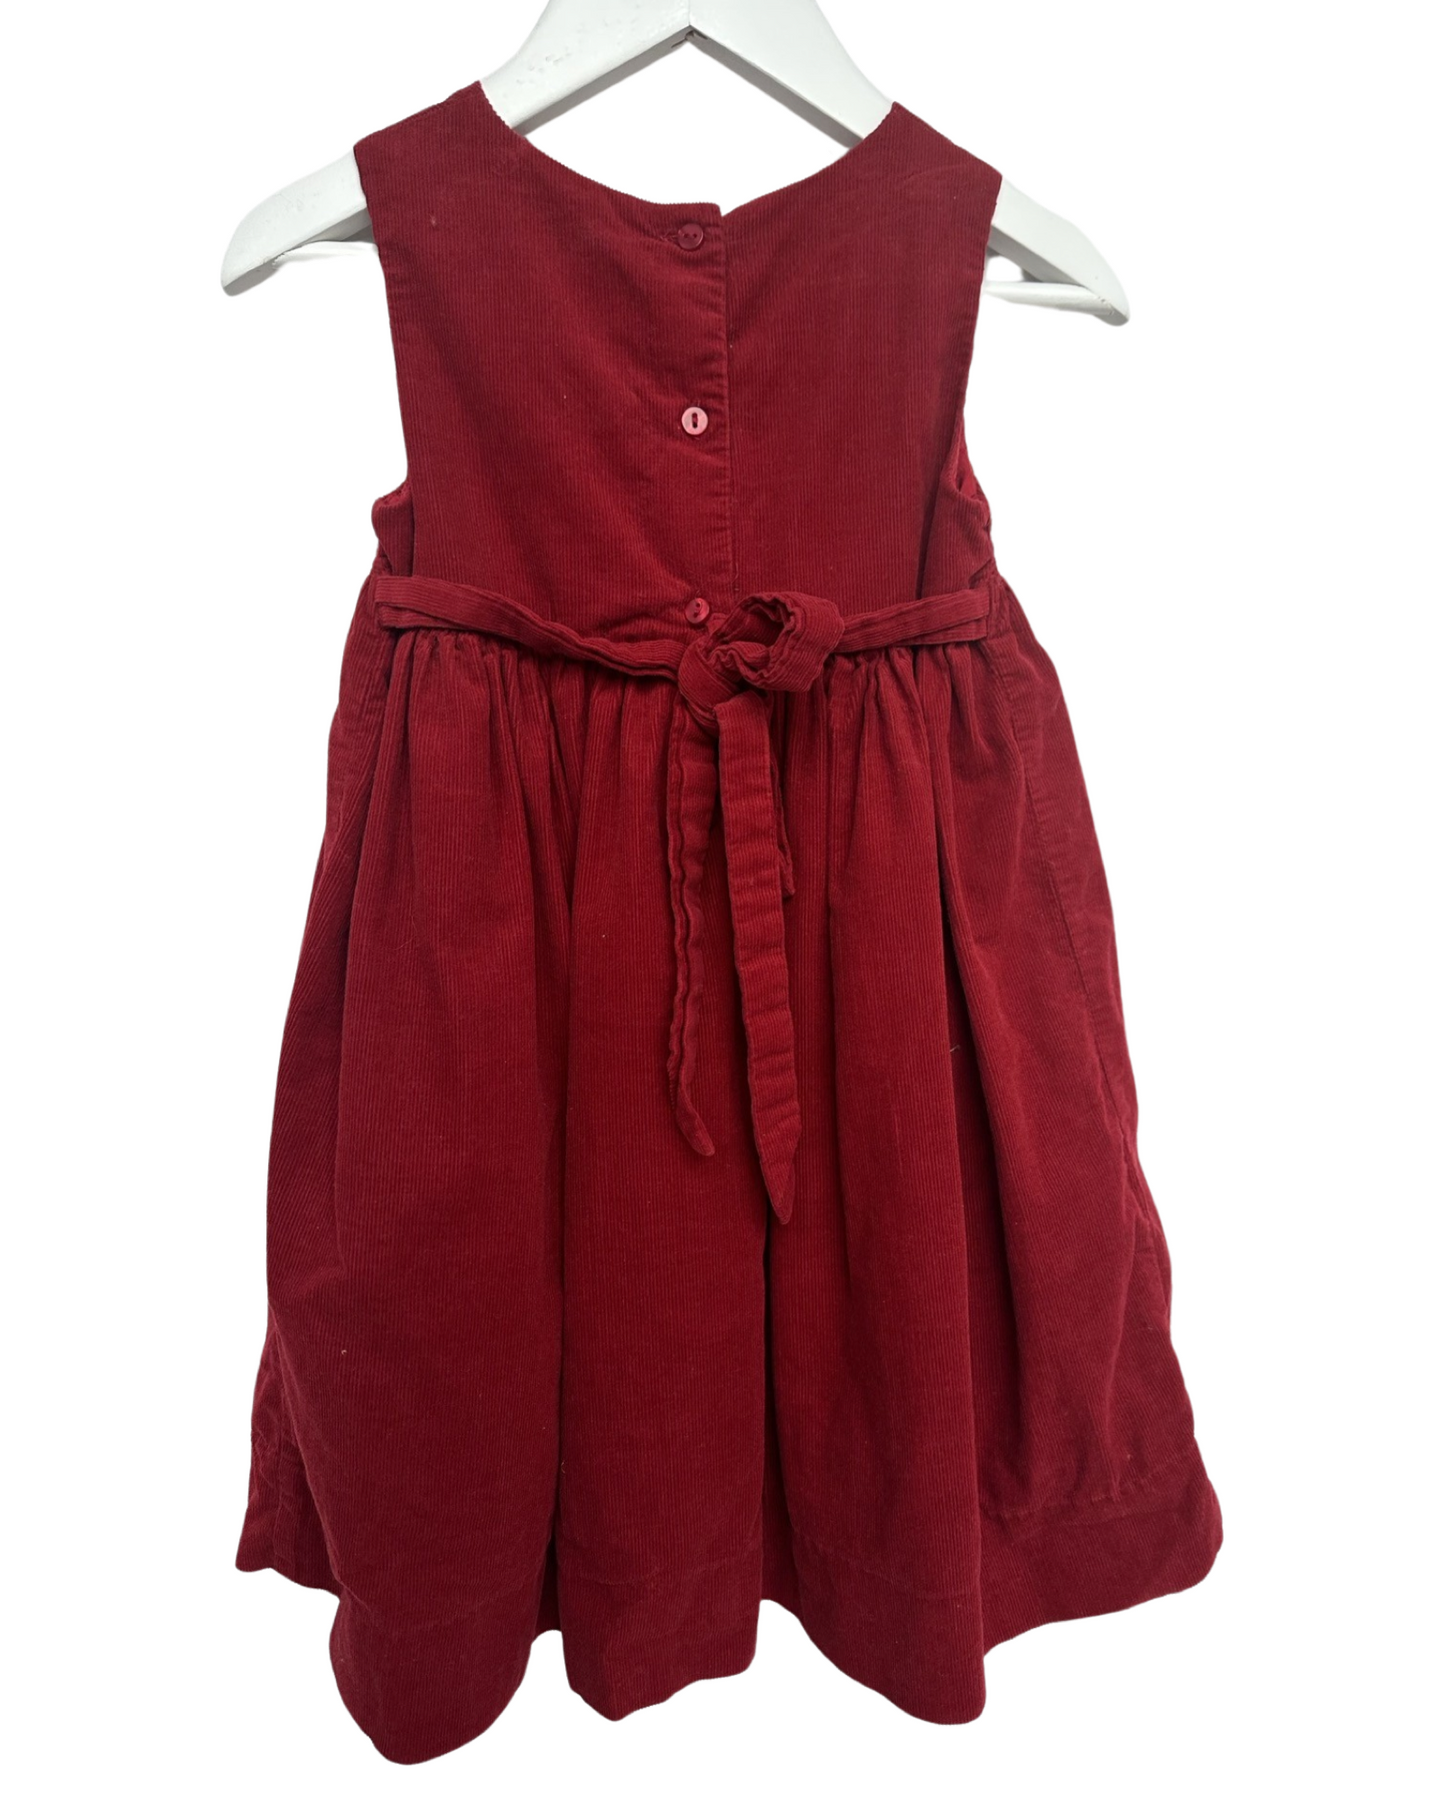 John Lewis heritage red needlecord dress (size 18-24mths)